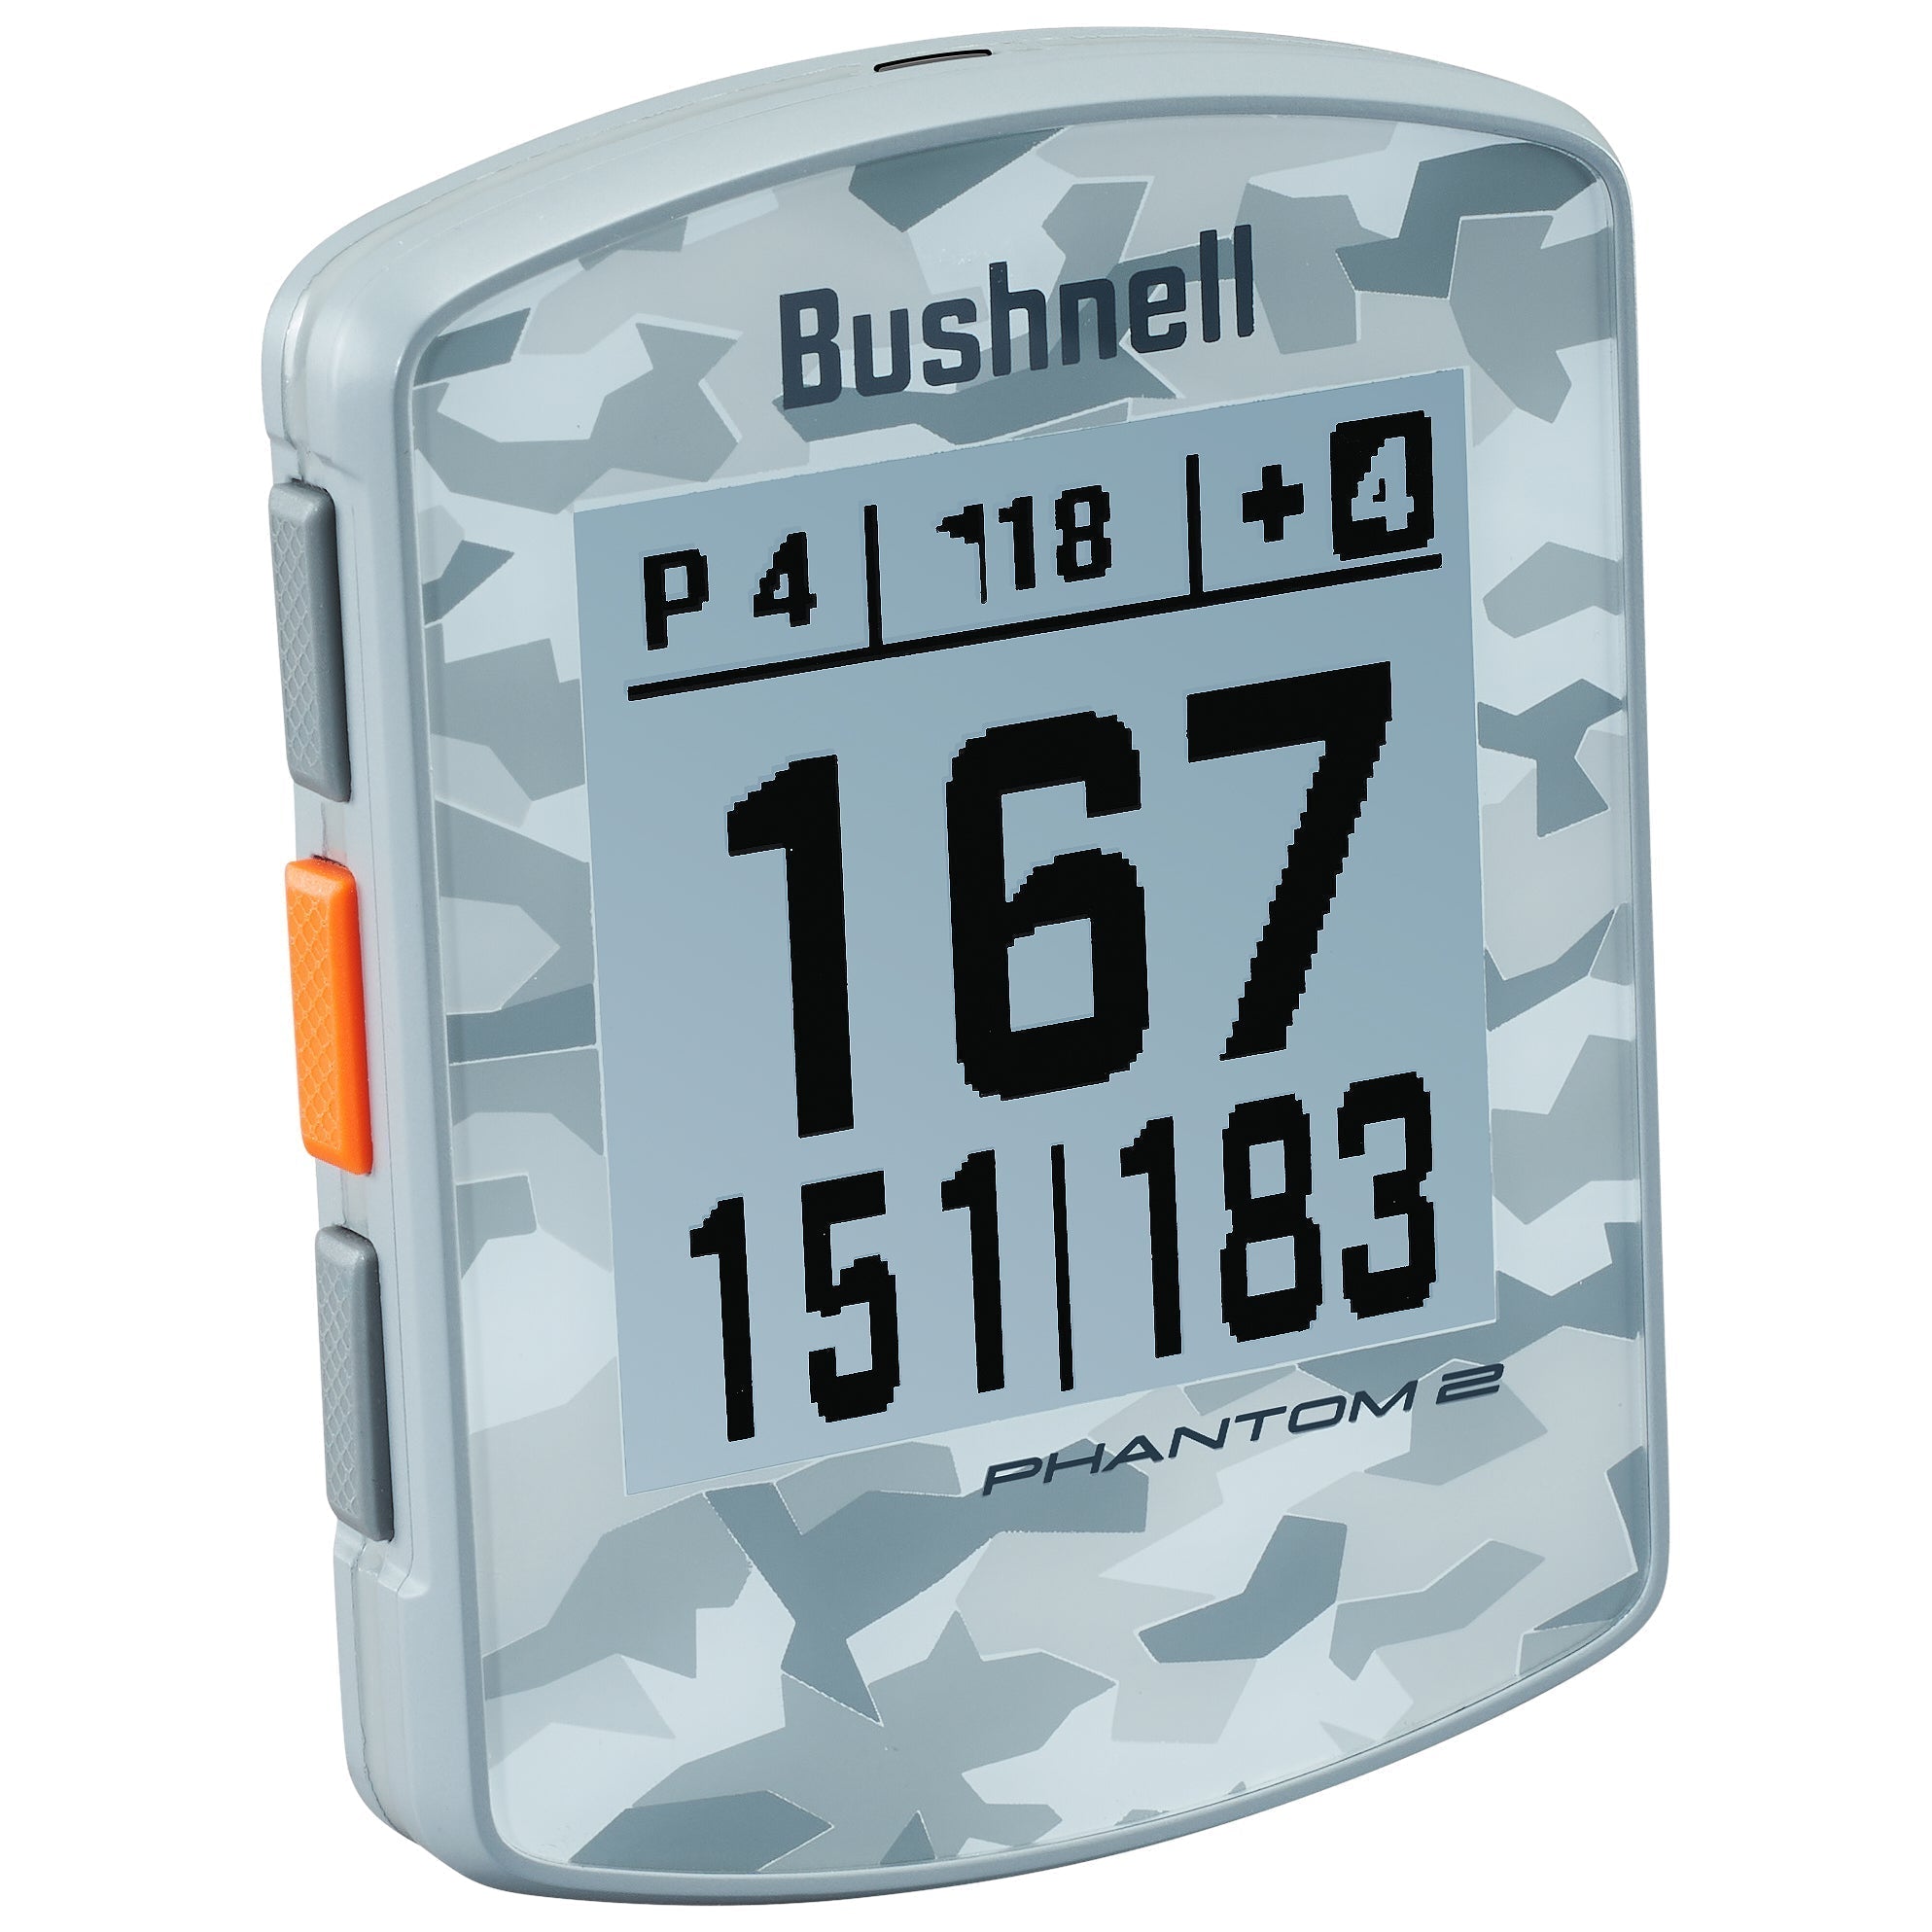 Bushnell Phantom 2 Golf GPS | GPS & Rangfinders | Evolution Golf | Bushnell | Evolution Golf 